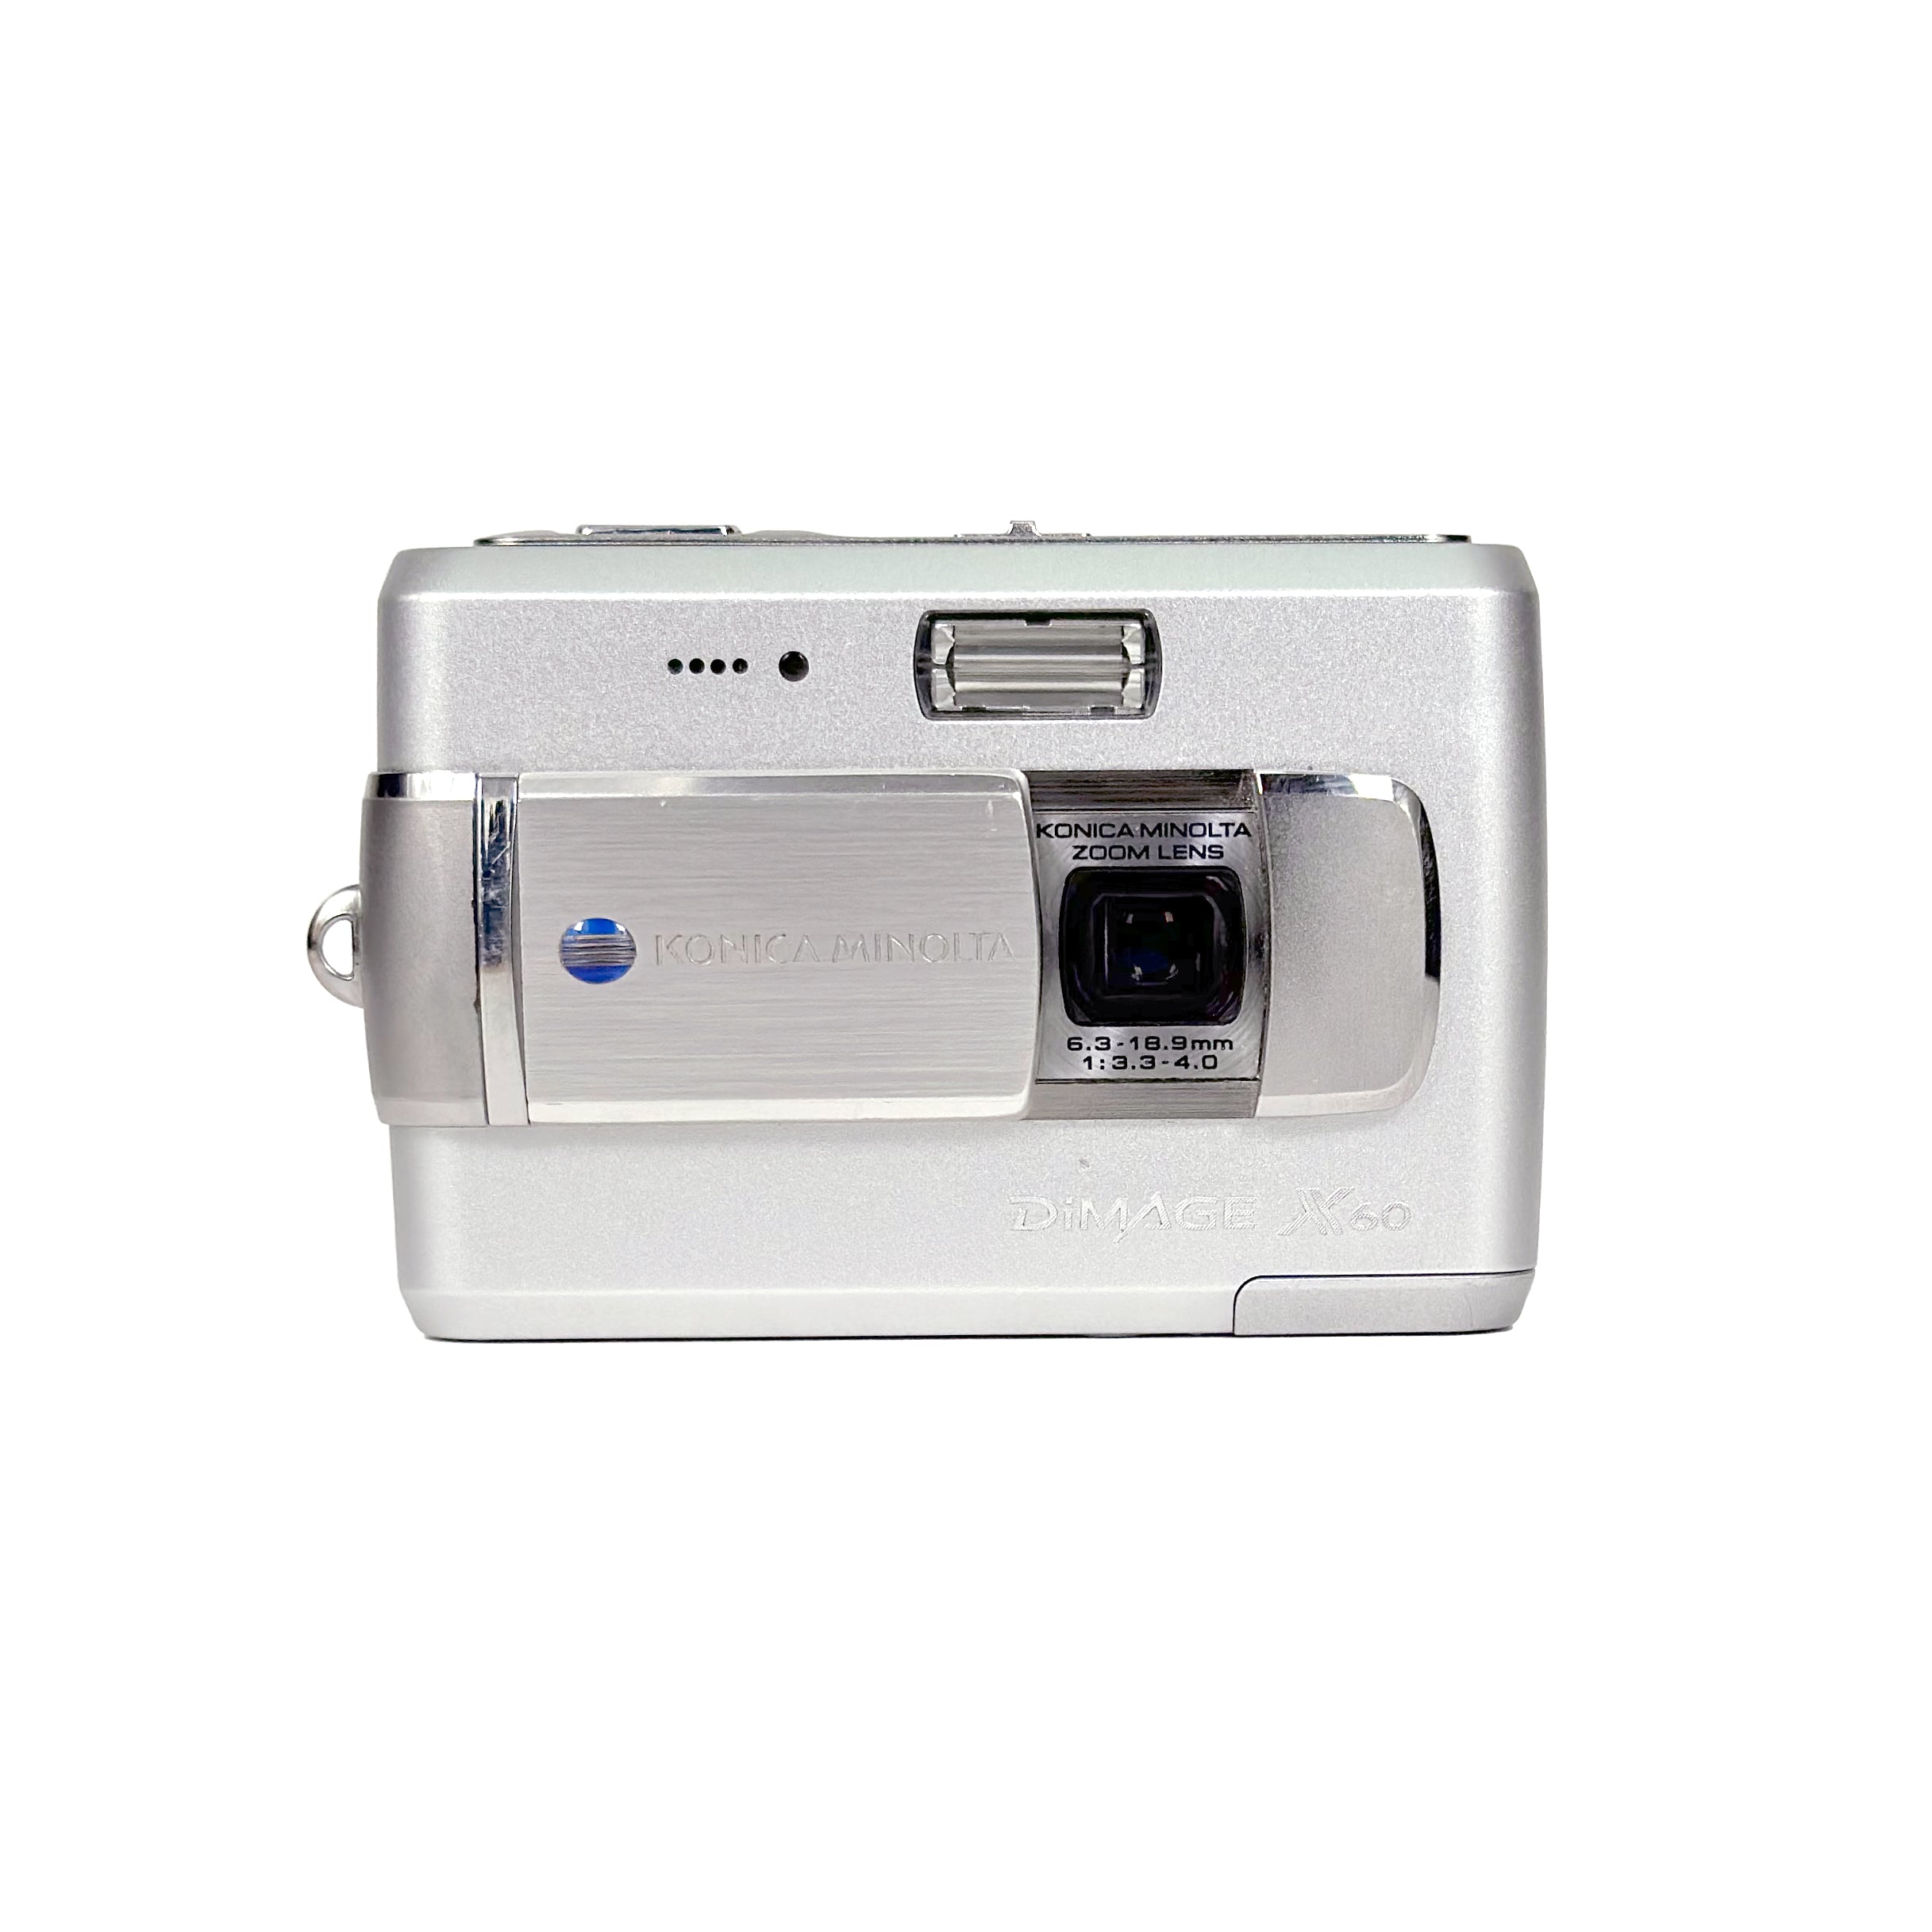 Konica Minolta DiMage X60 Digital Compact